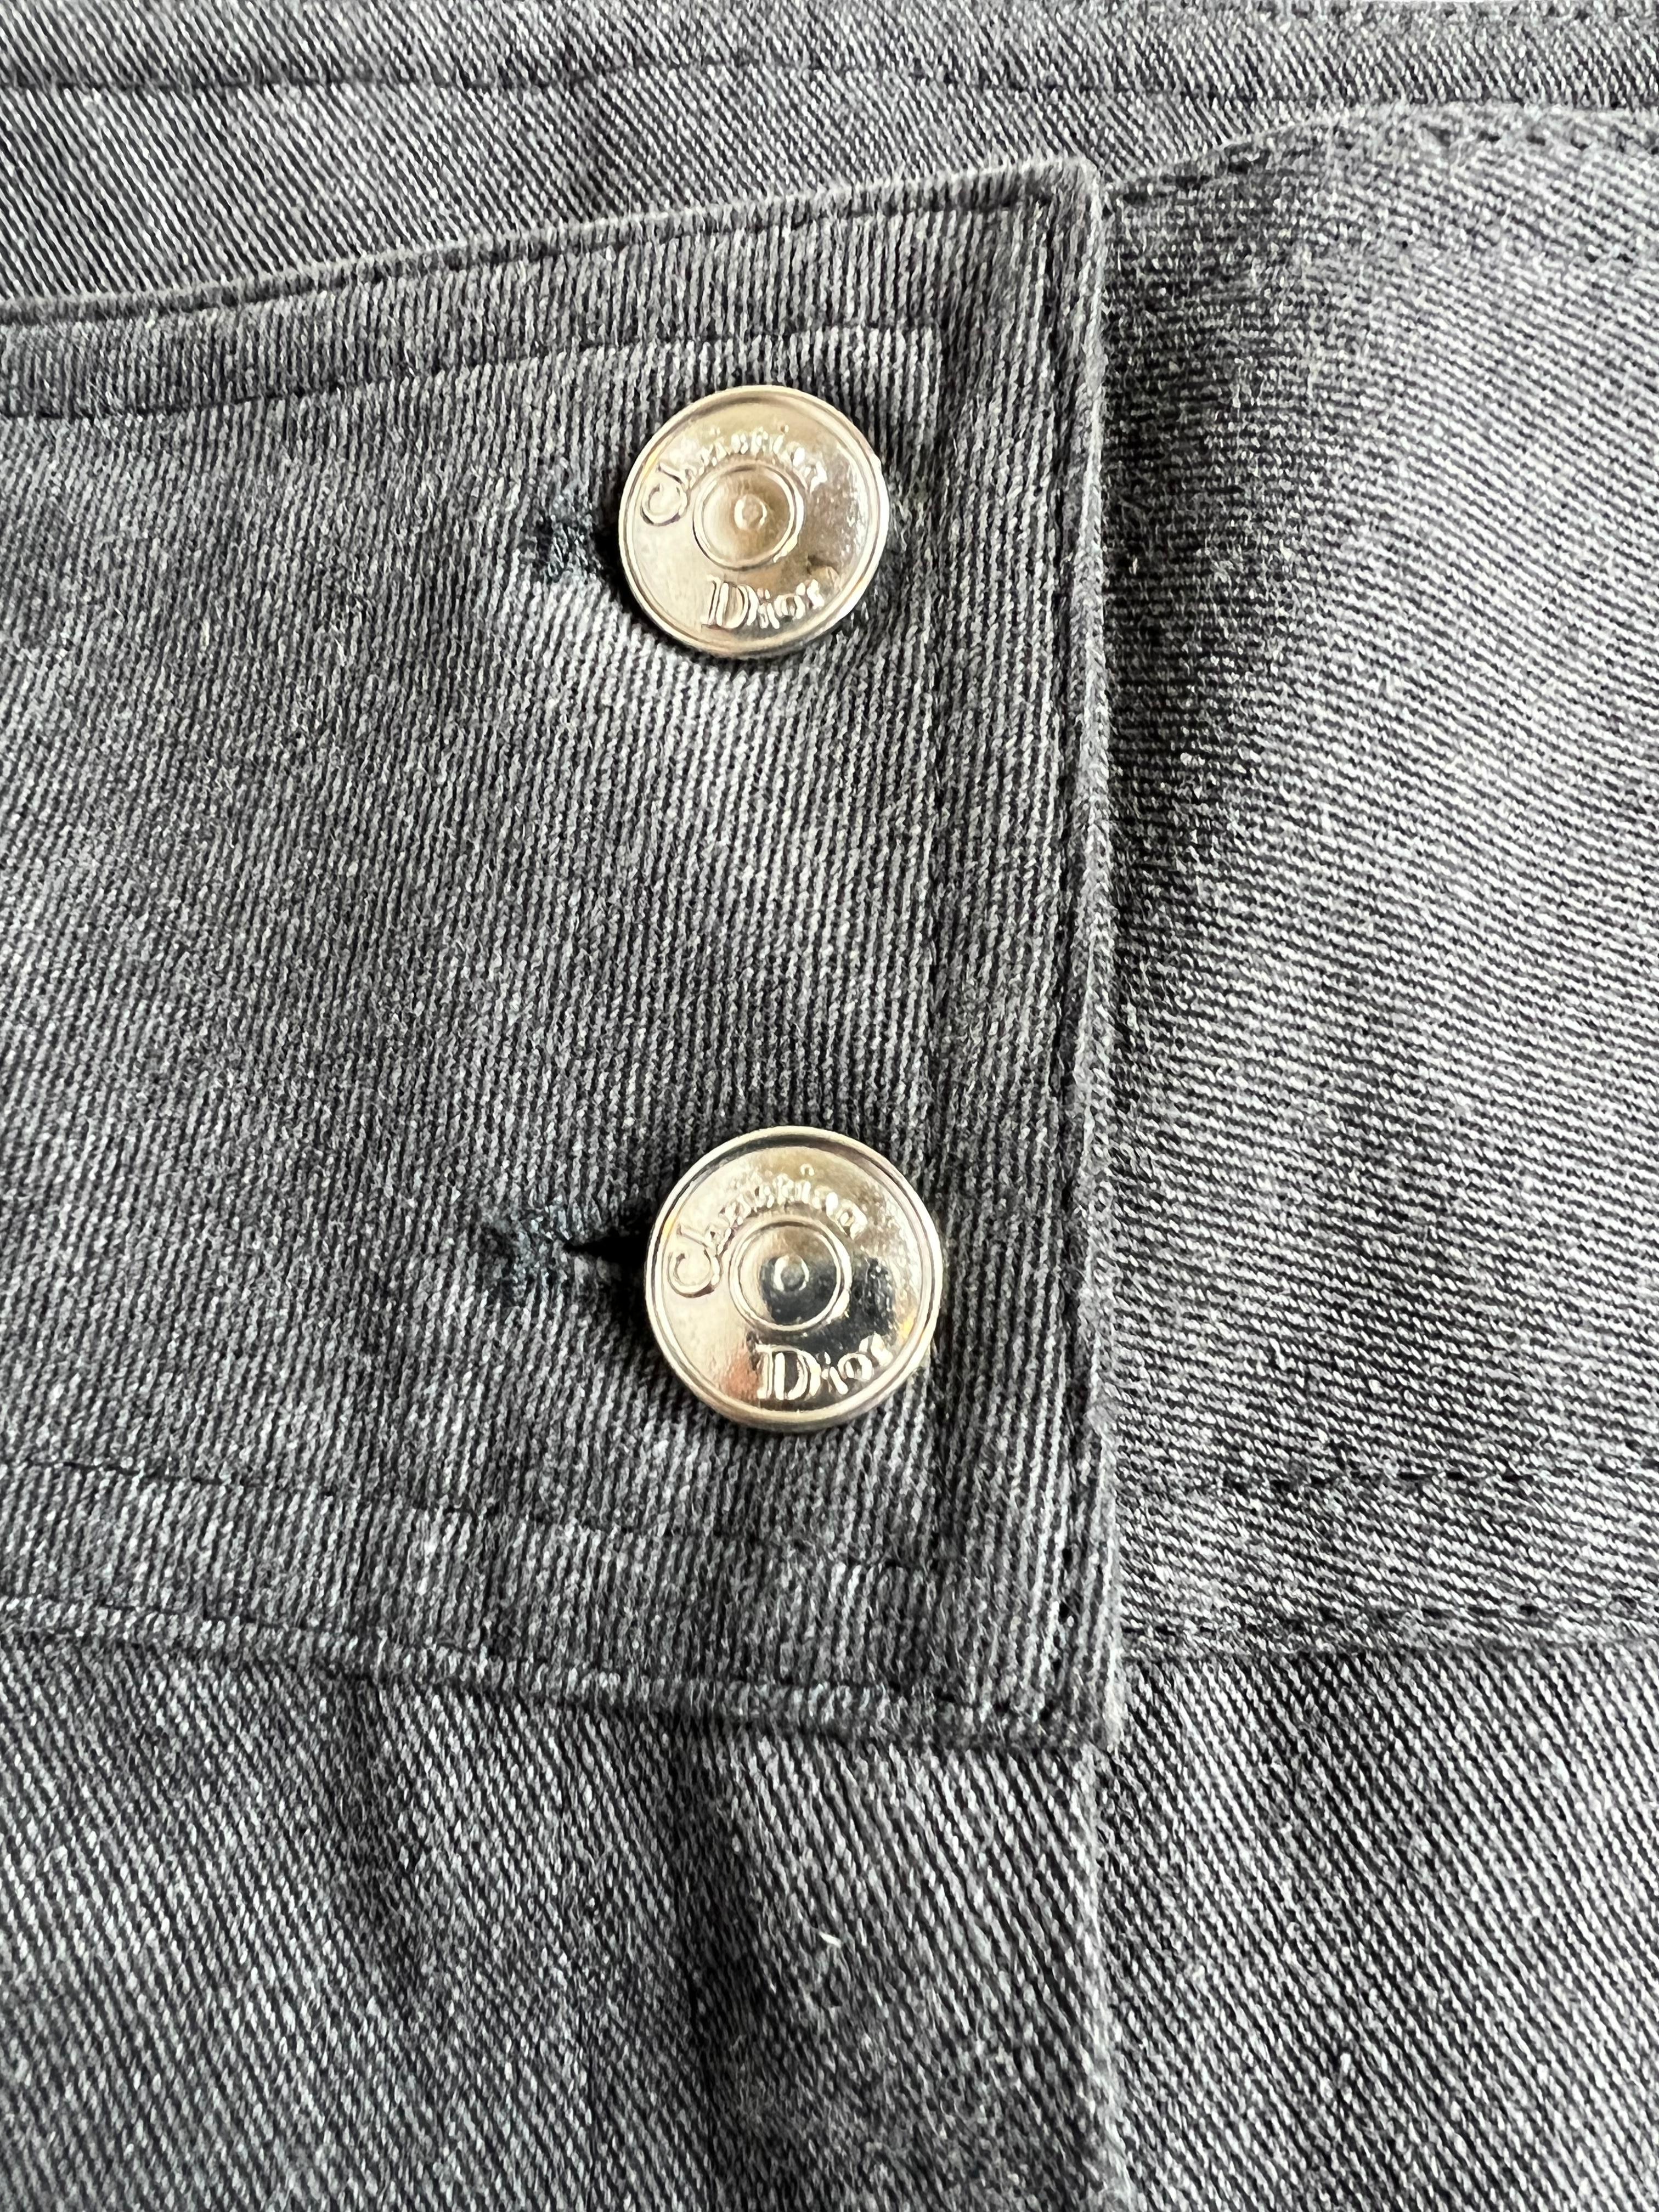 Christian Dior - Pantalon en jean gris, taille 10 Unisexe en vente